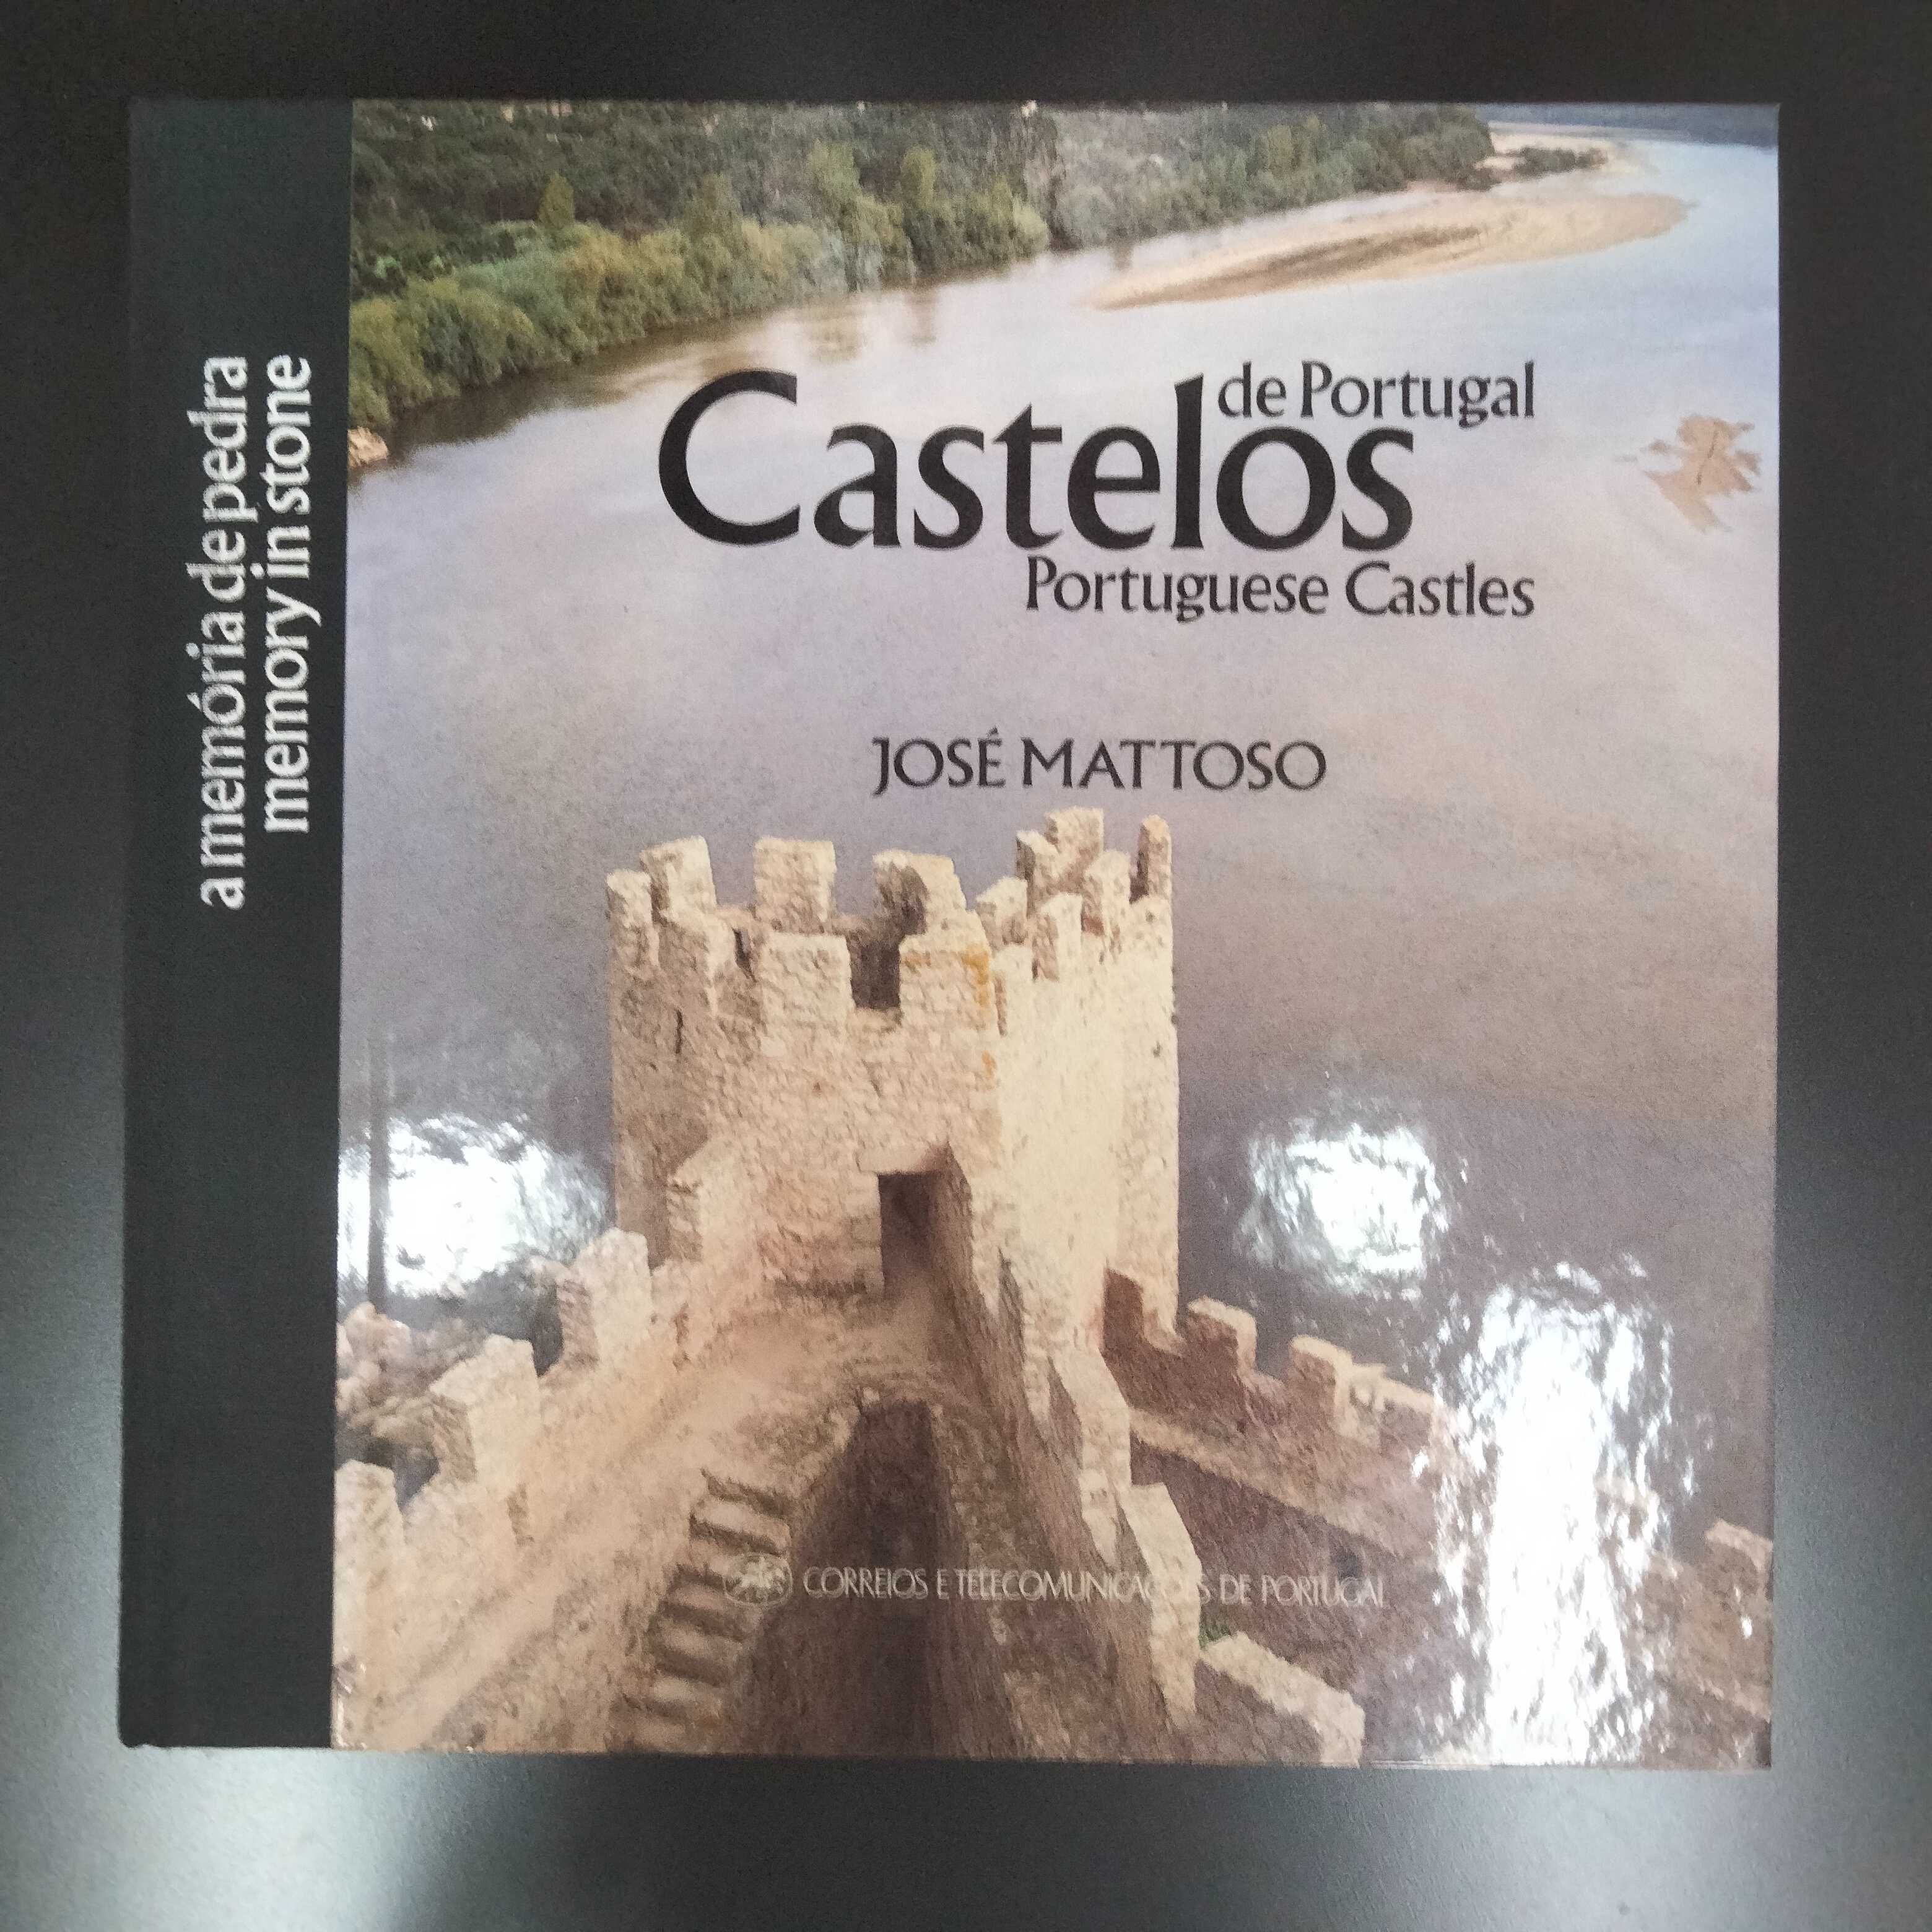 Castelos de Portugal - José Mattoso  (Ed. CTT)